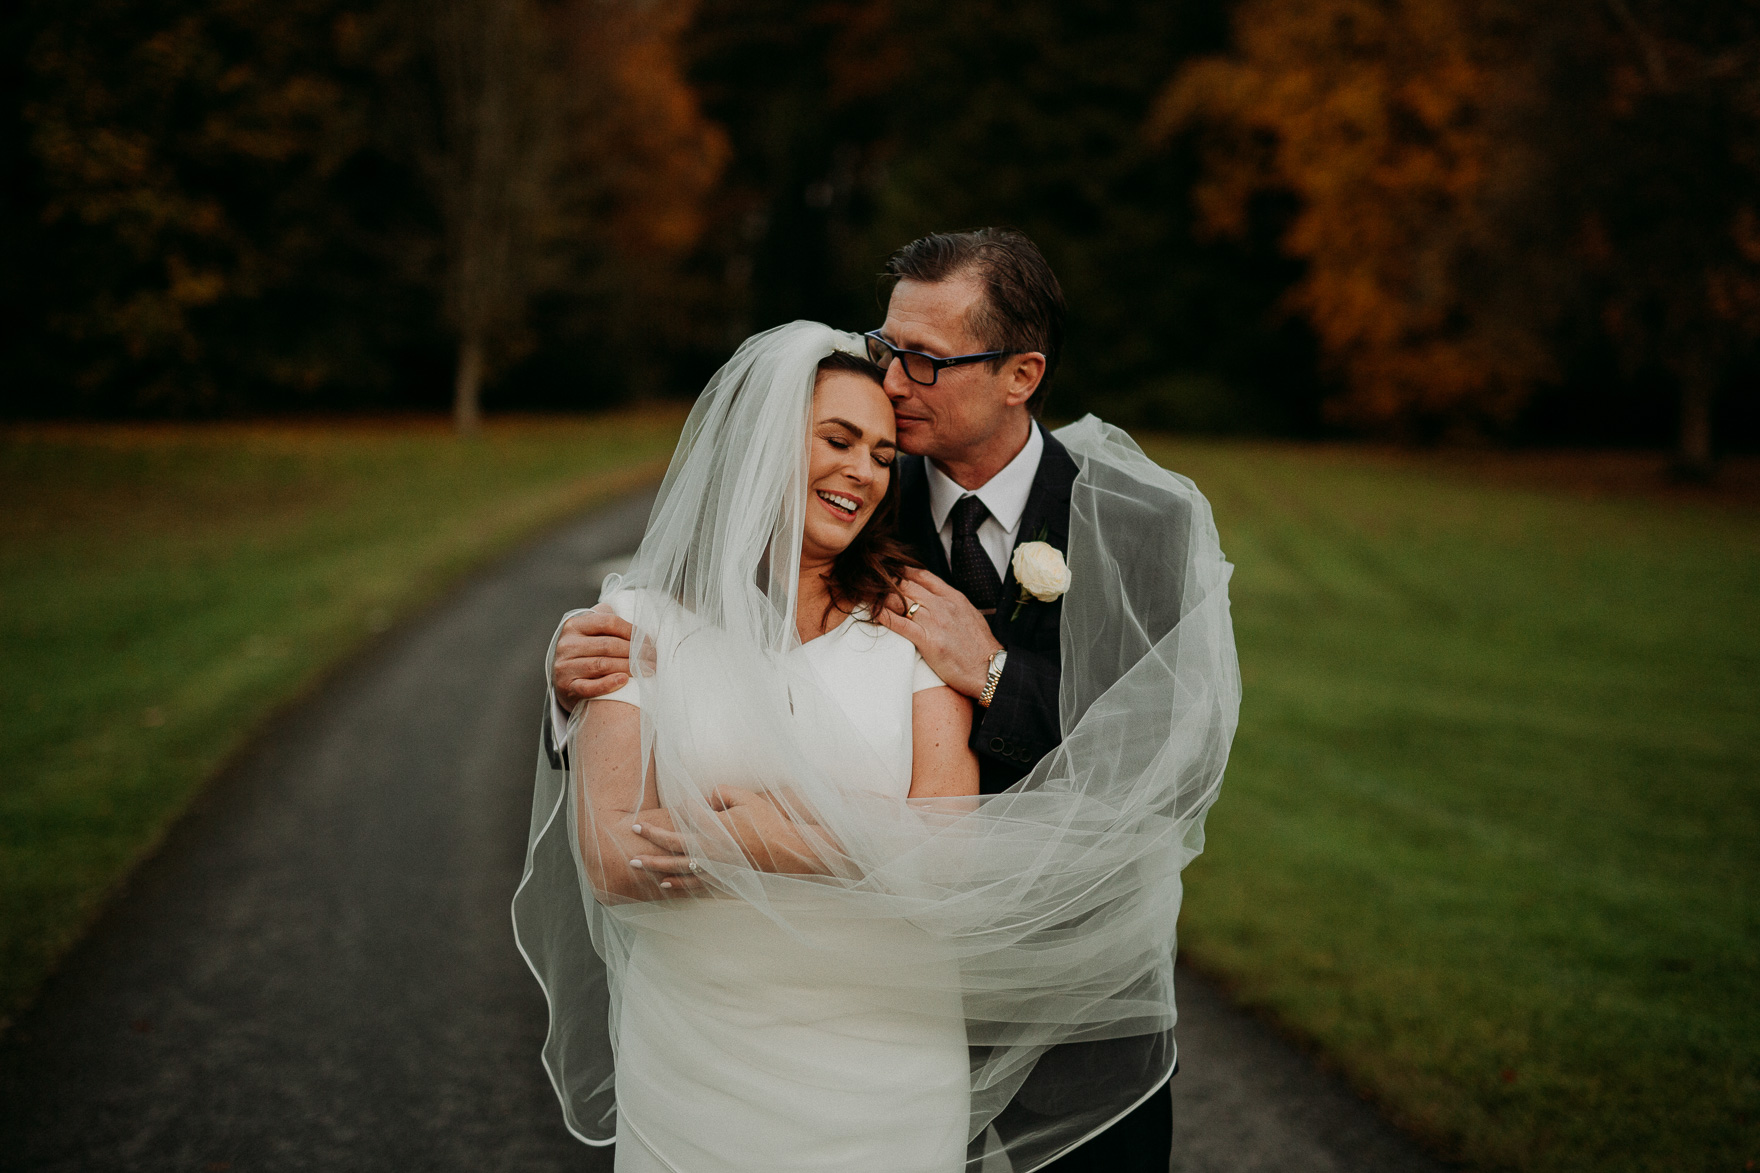 How to choose wedding photographer